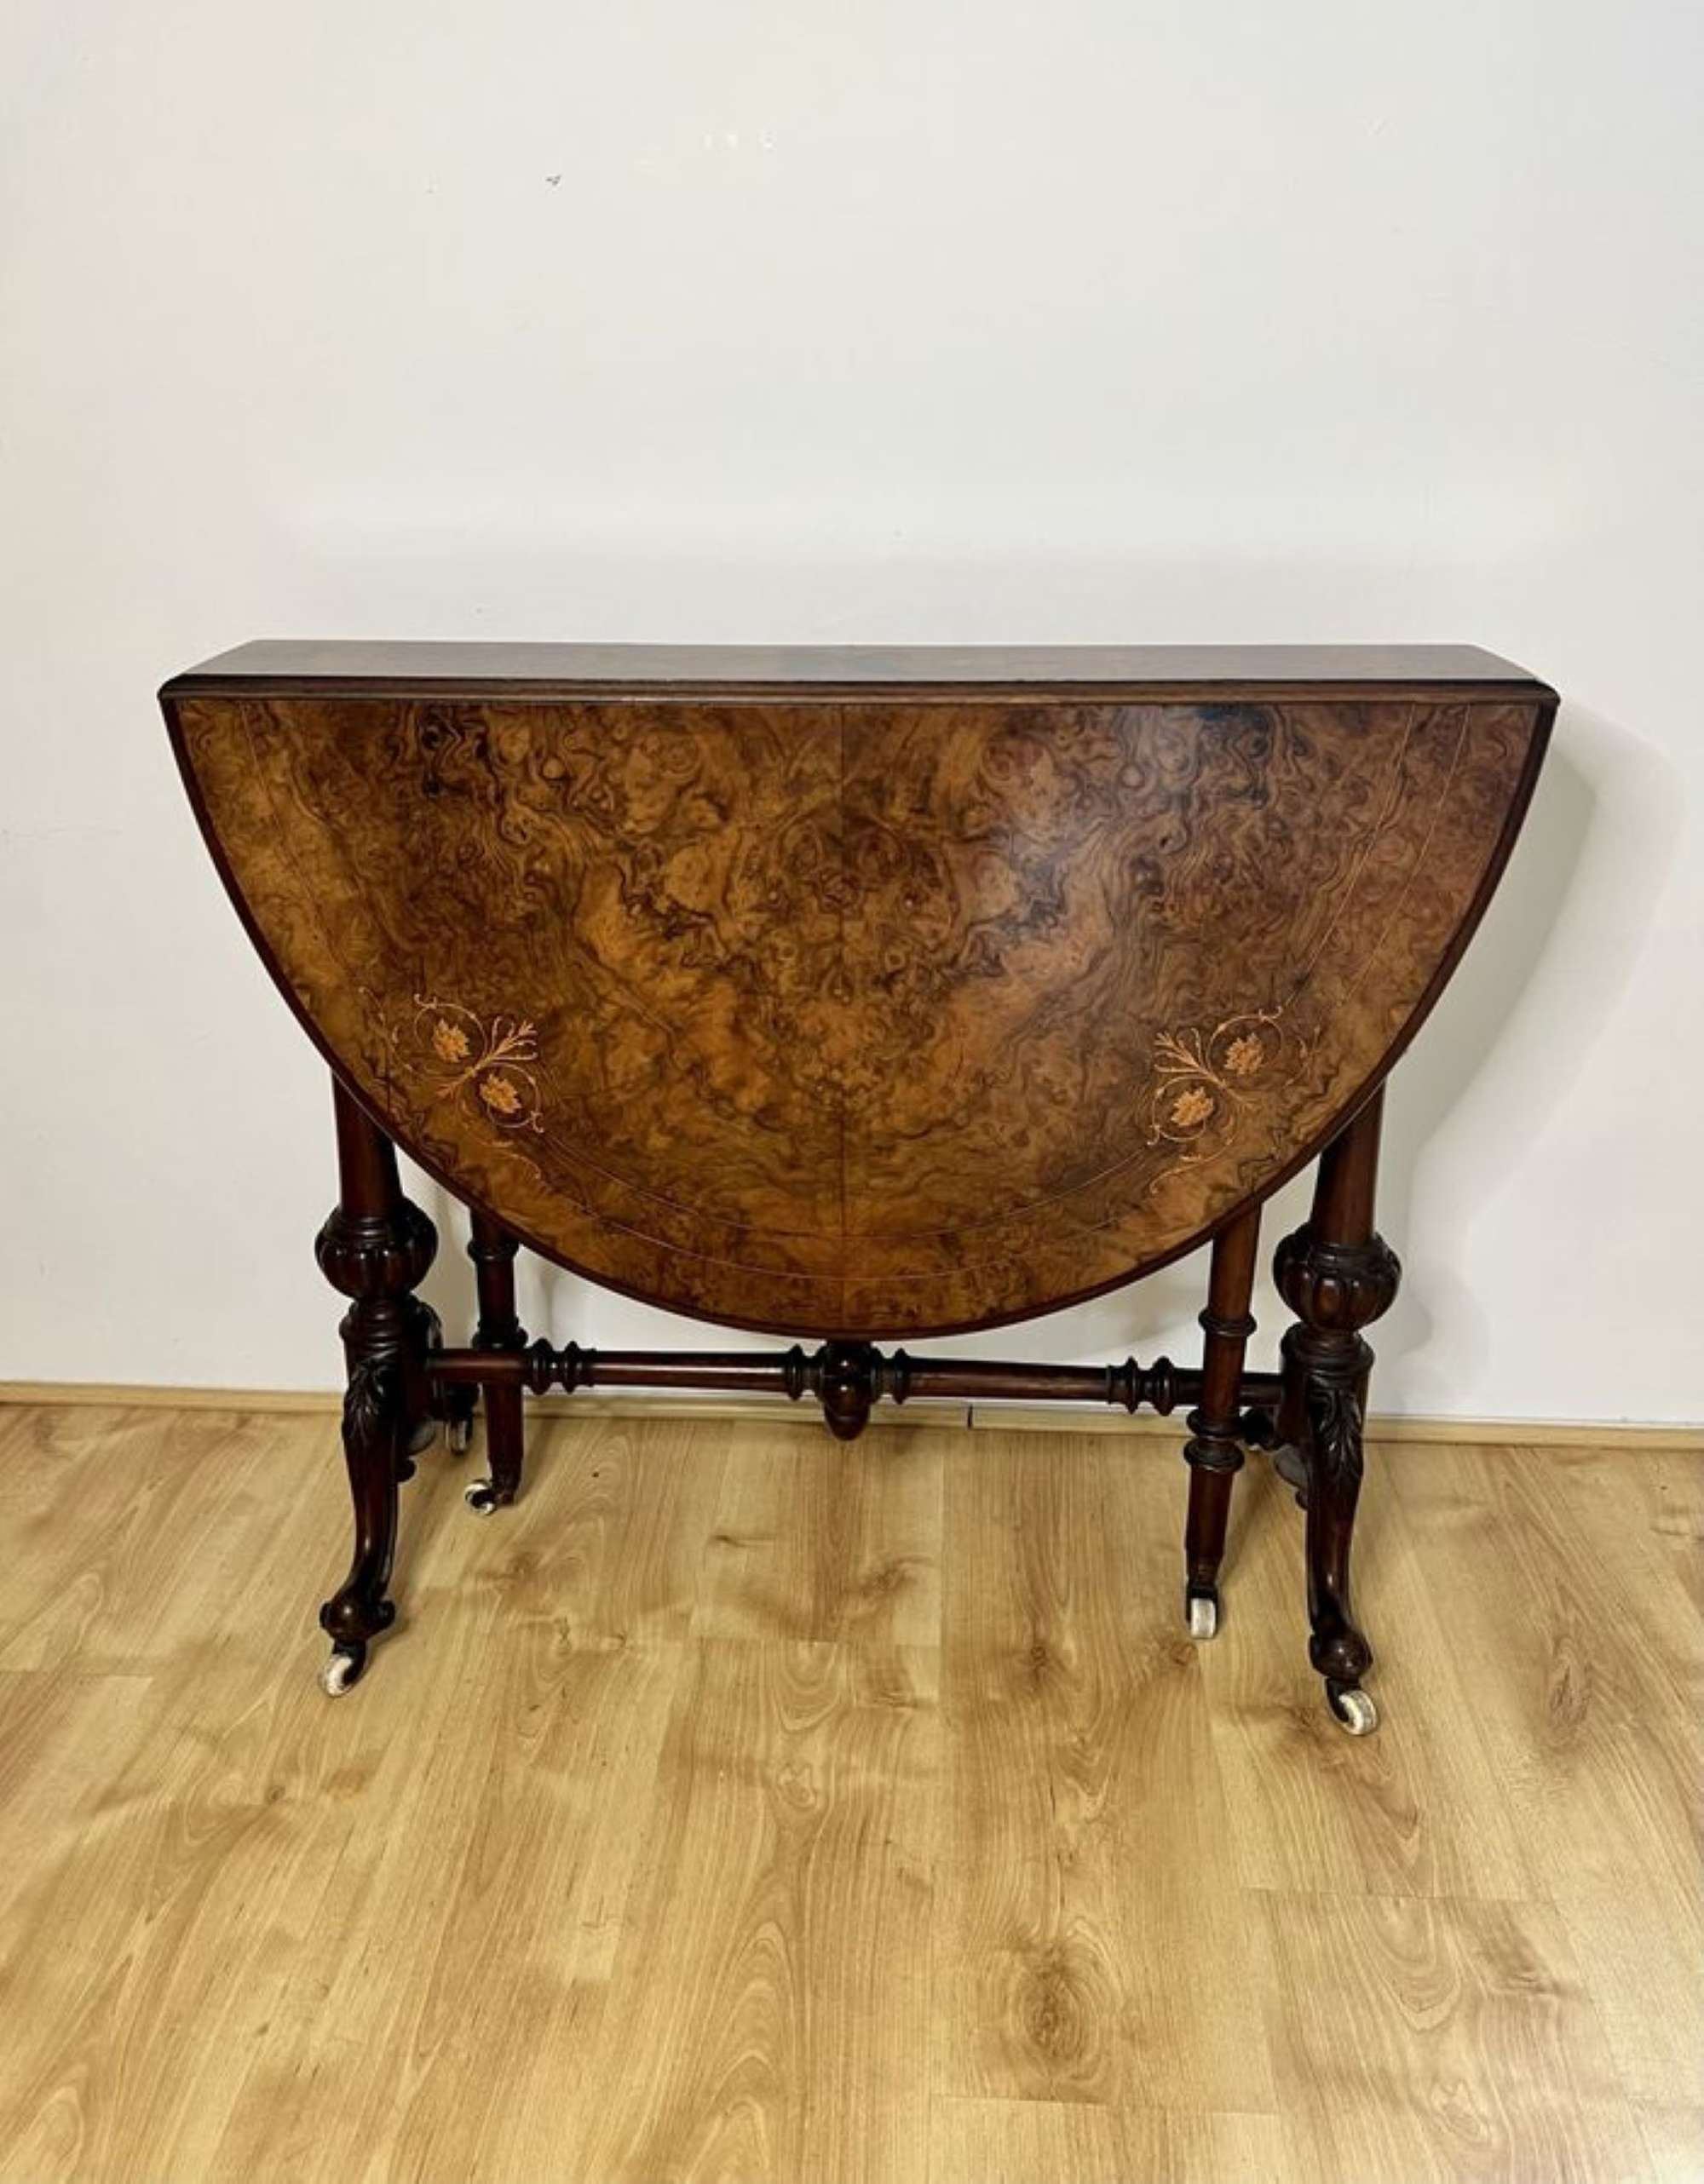 Fantastic quality antique Victorian burr walnut inlaid Sutherland table